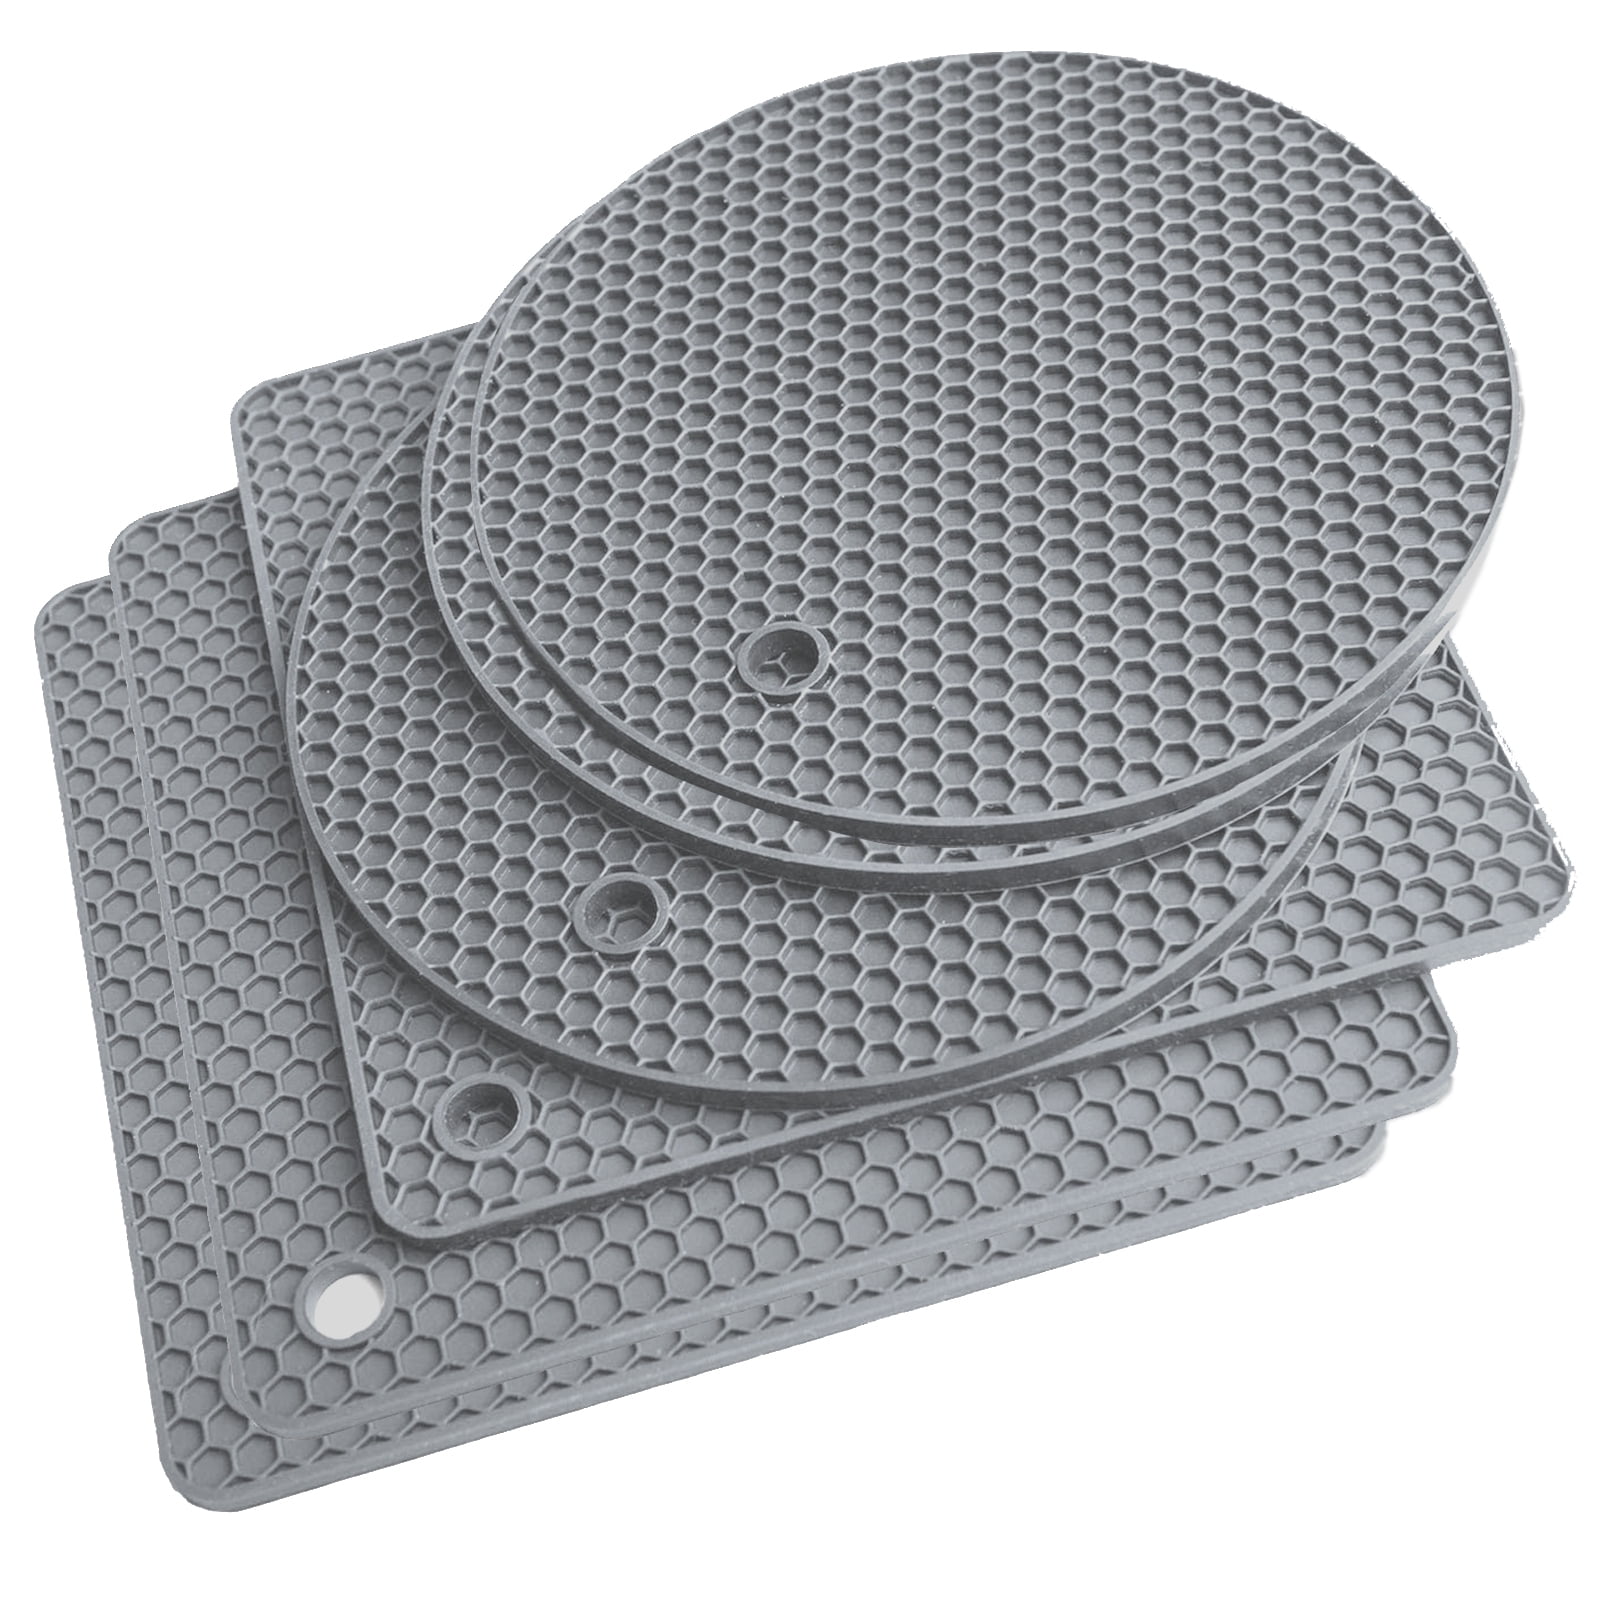 2pc Round Silicone Pot Holders Set Coaster Multi-Purpose Hot Pads Heat  Resistant